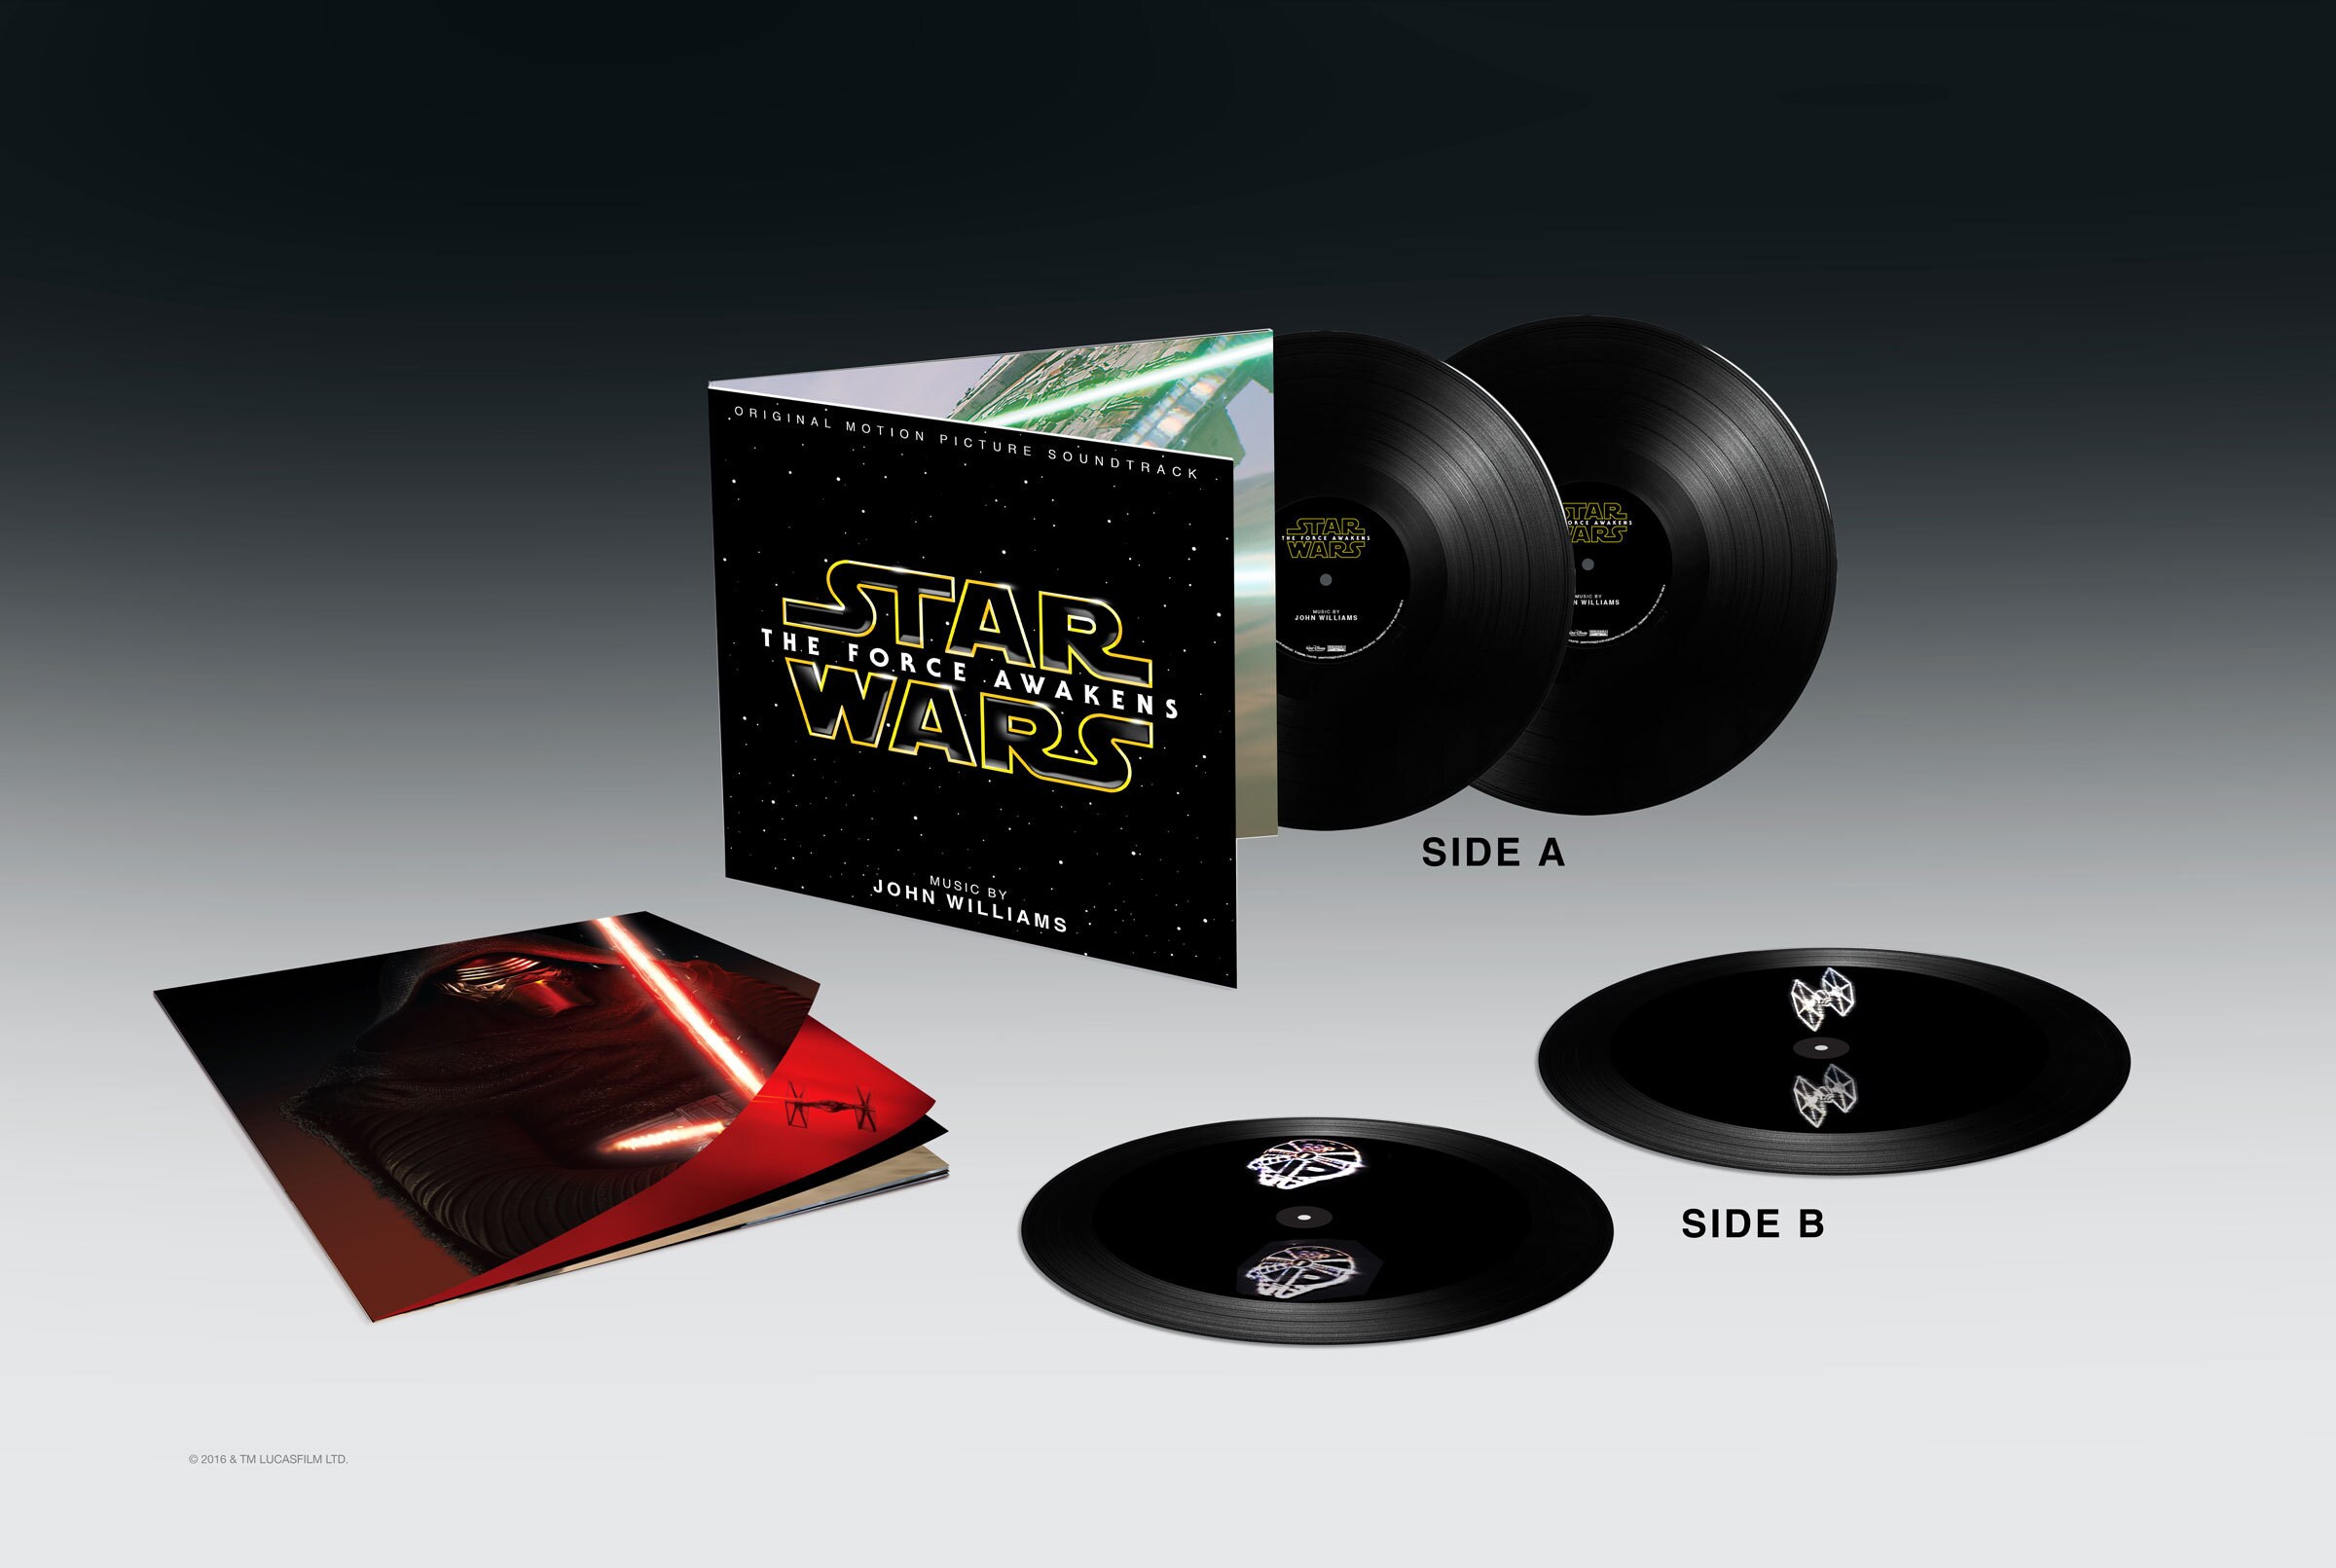 Aubergine marv radioaktivitet The Star Wars: The Force Awakens Soundtrack Comes to Vinyl...with Holograms  | StarWars.com